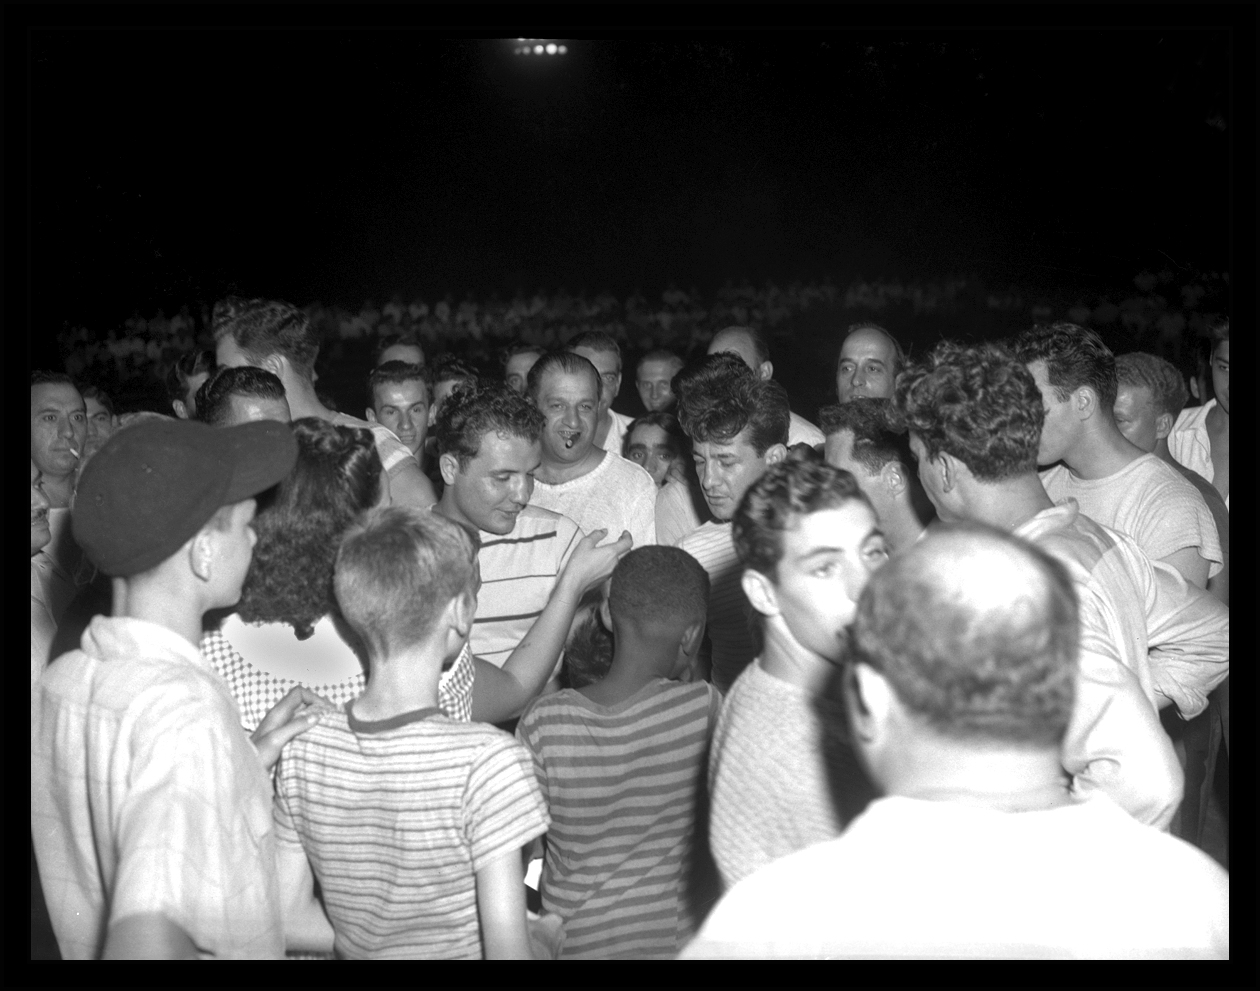 Original Raging Bull Jake LaMotta &amp; Rocky Graziano ( center ) Surrounded by Crowd c.1945 from original 4x5 negative